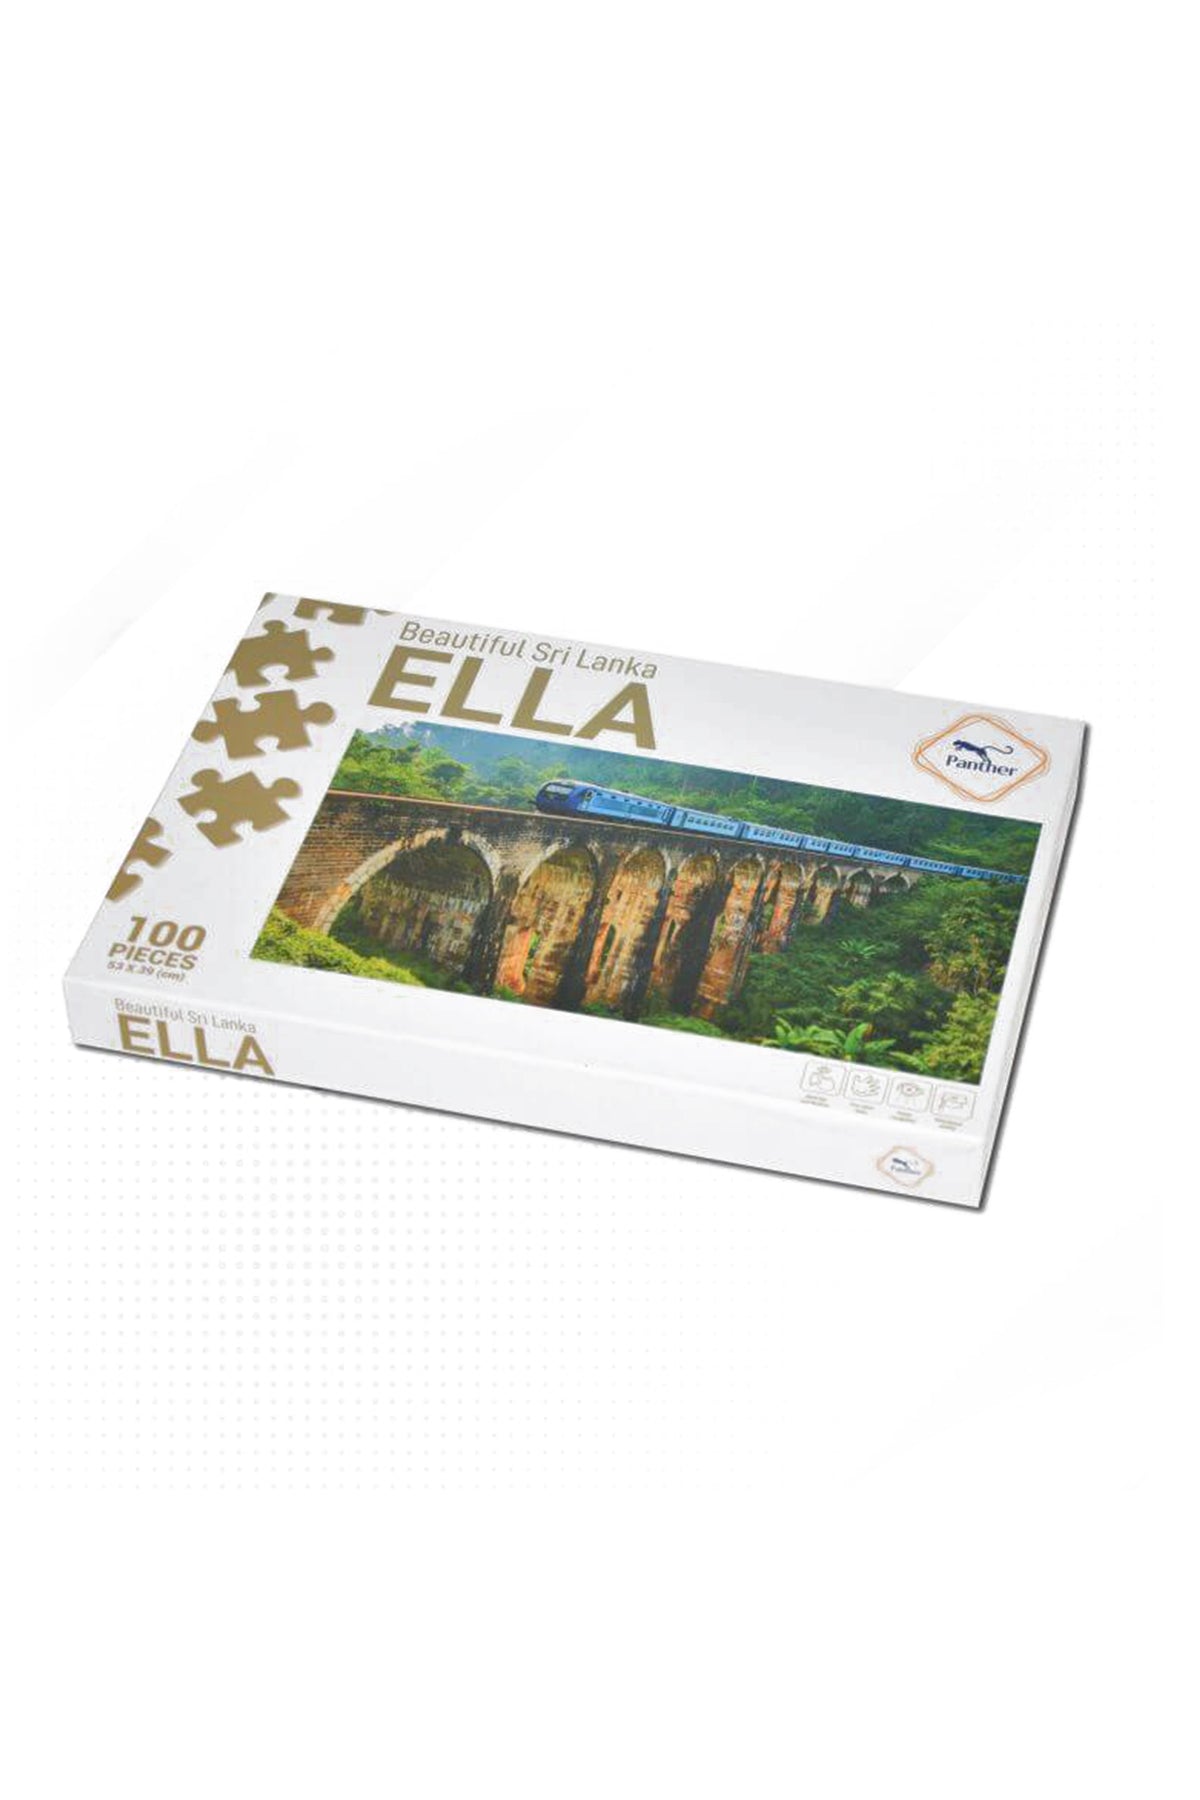 Beautiful Sri Lanka Ella Bridge Puzzle Set